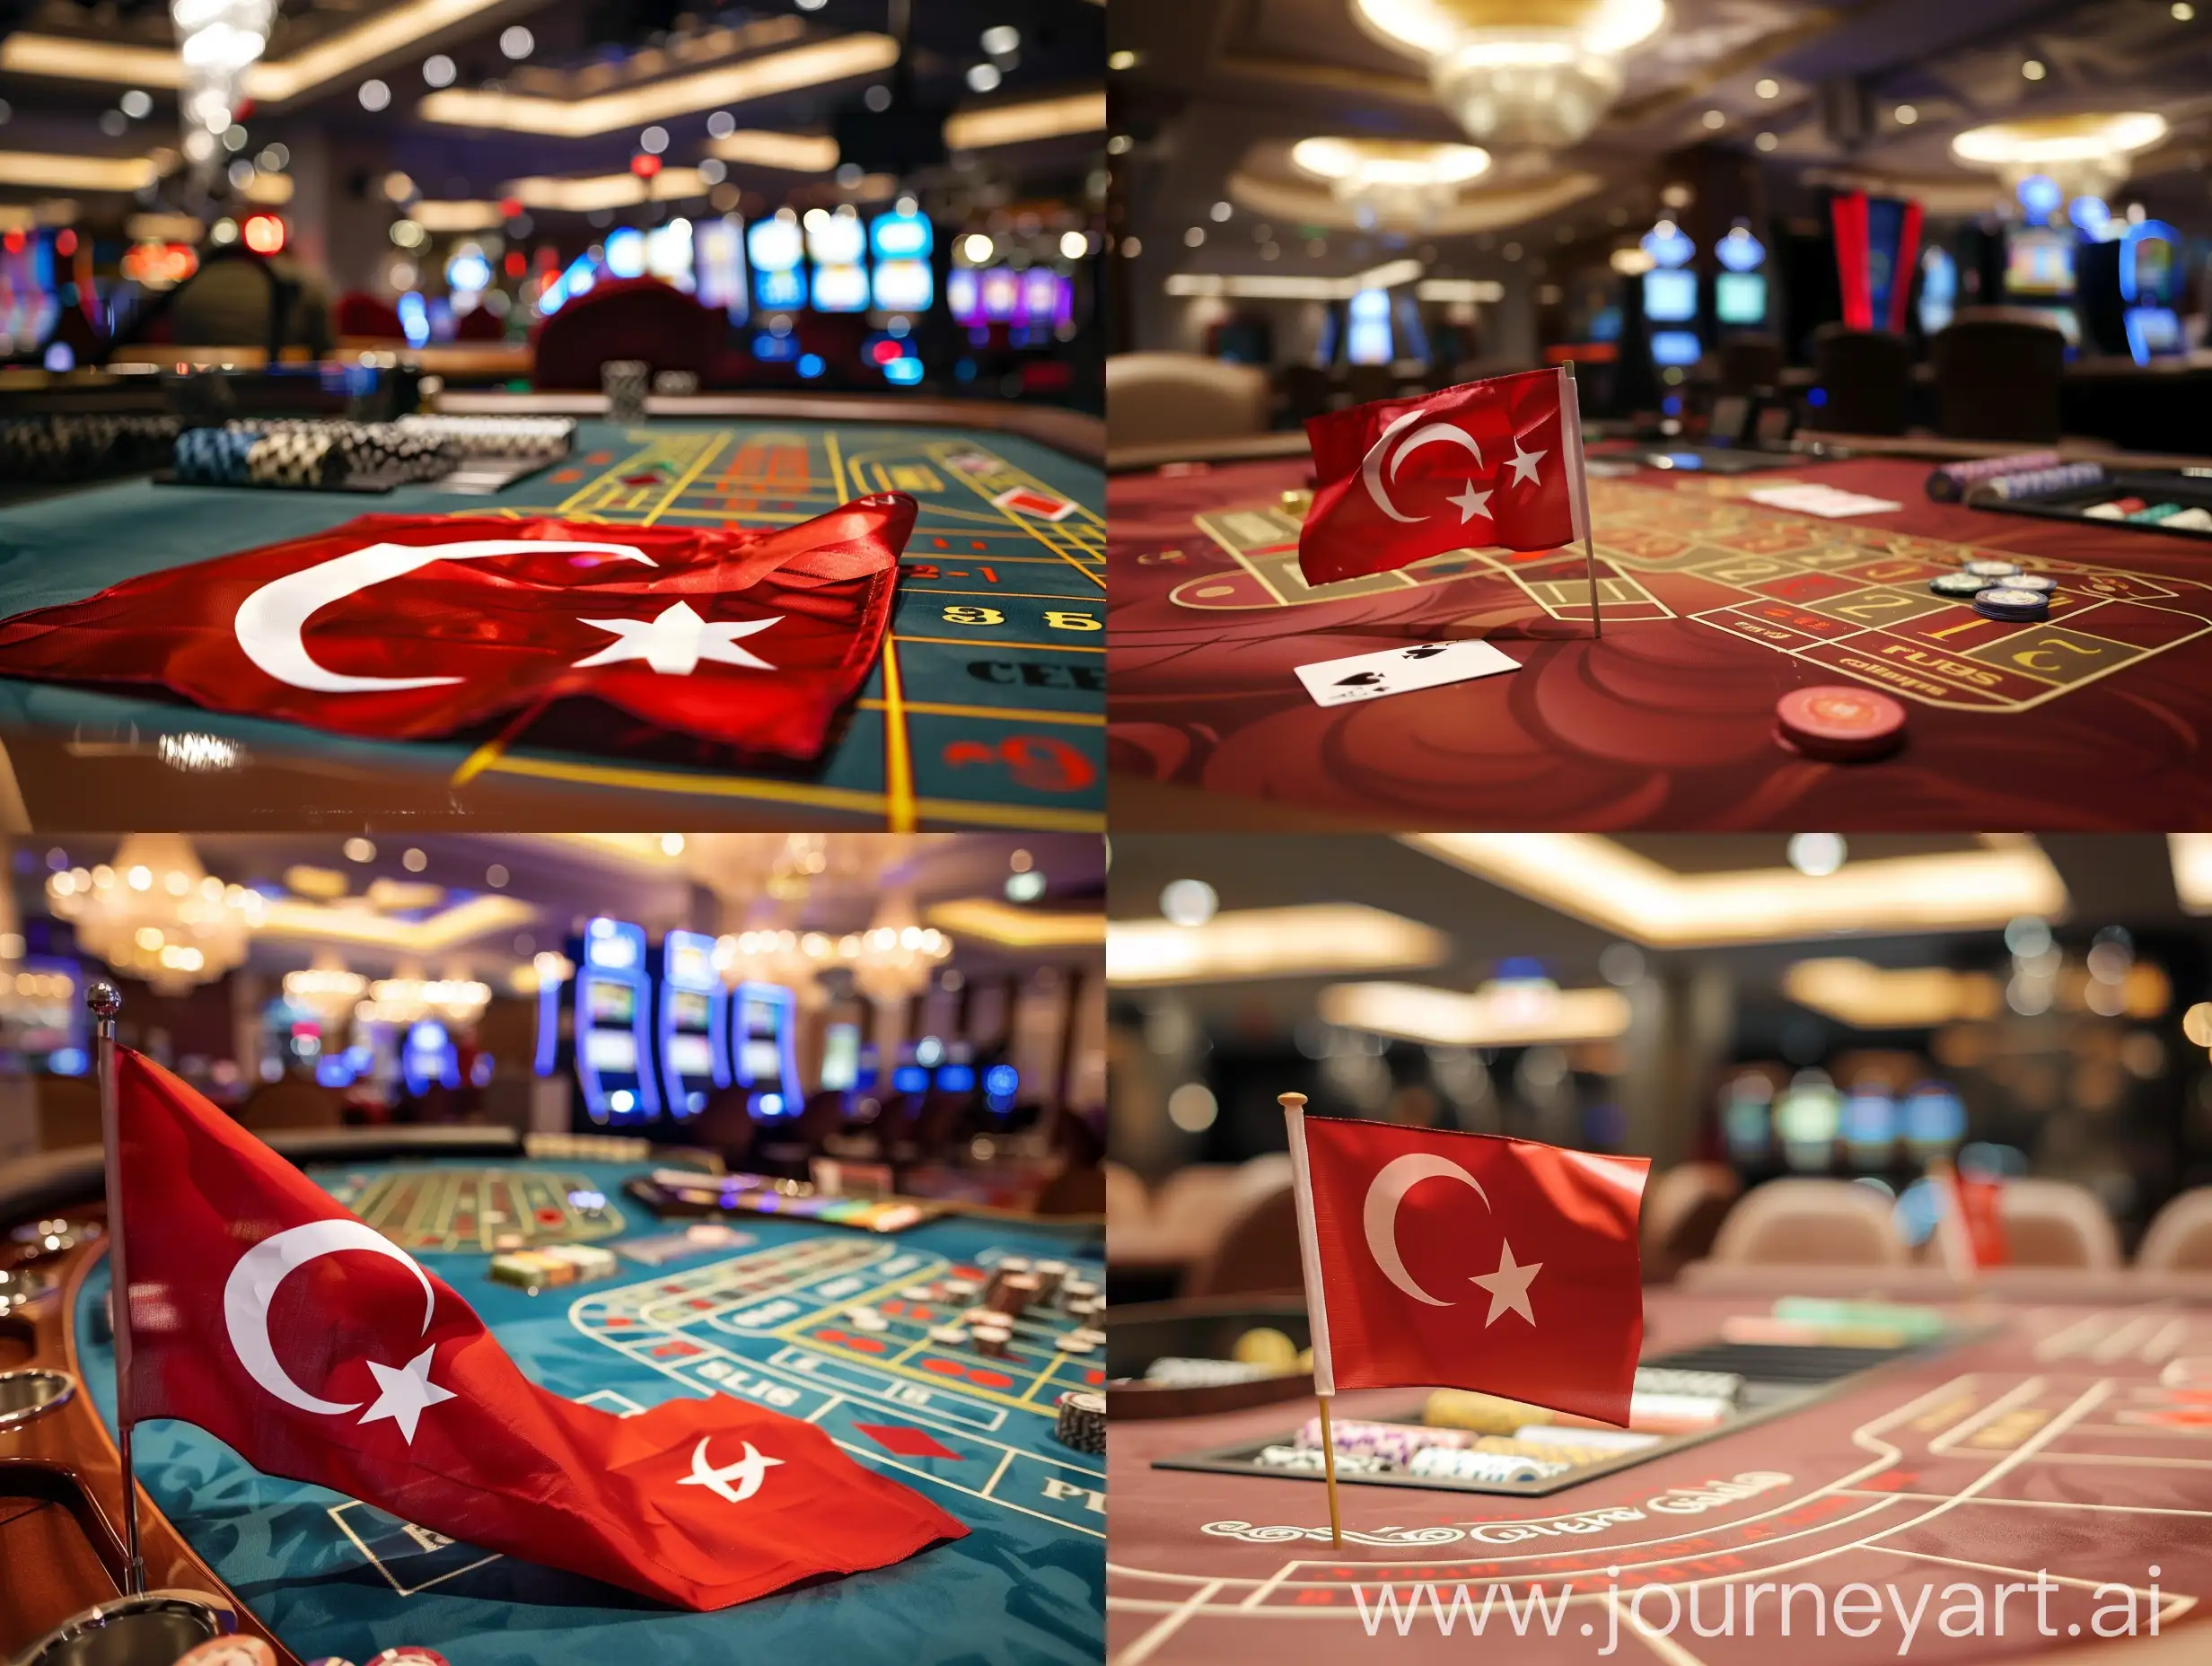 Turkish Flag on the casino table